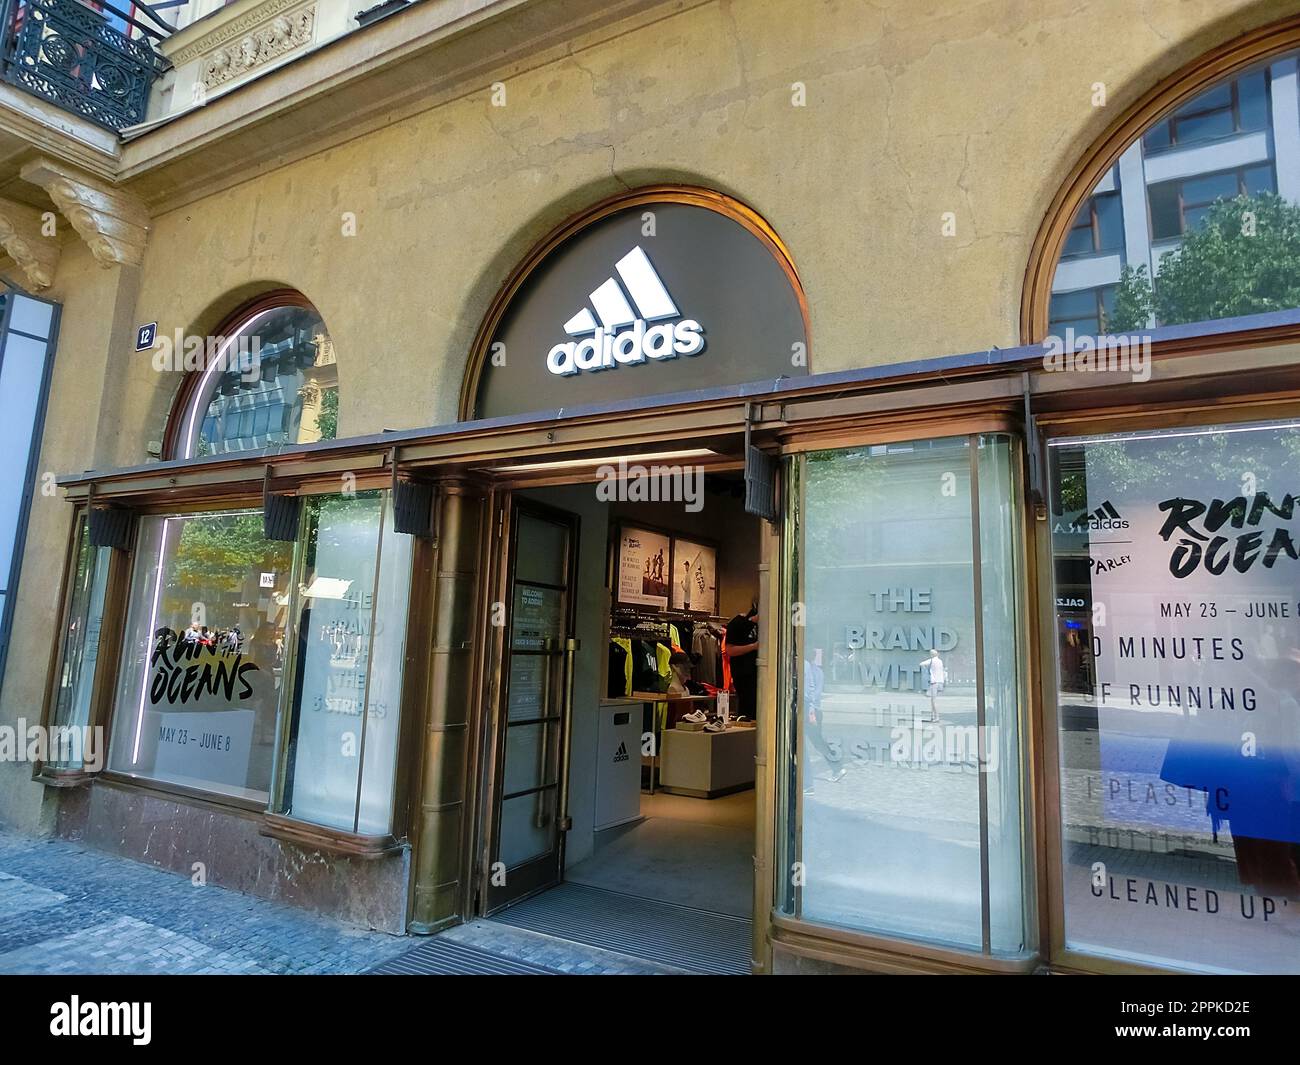 The facade of the Adidas store in Prague, Czech republic Stock Photo